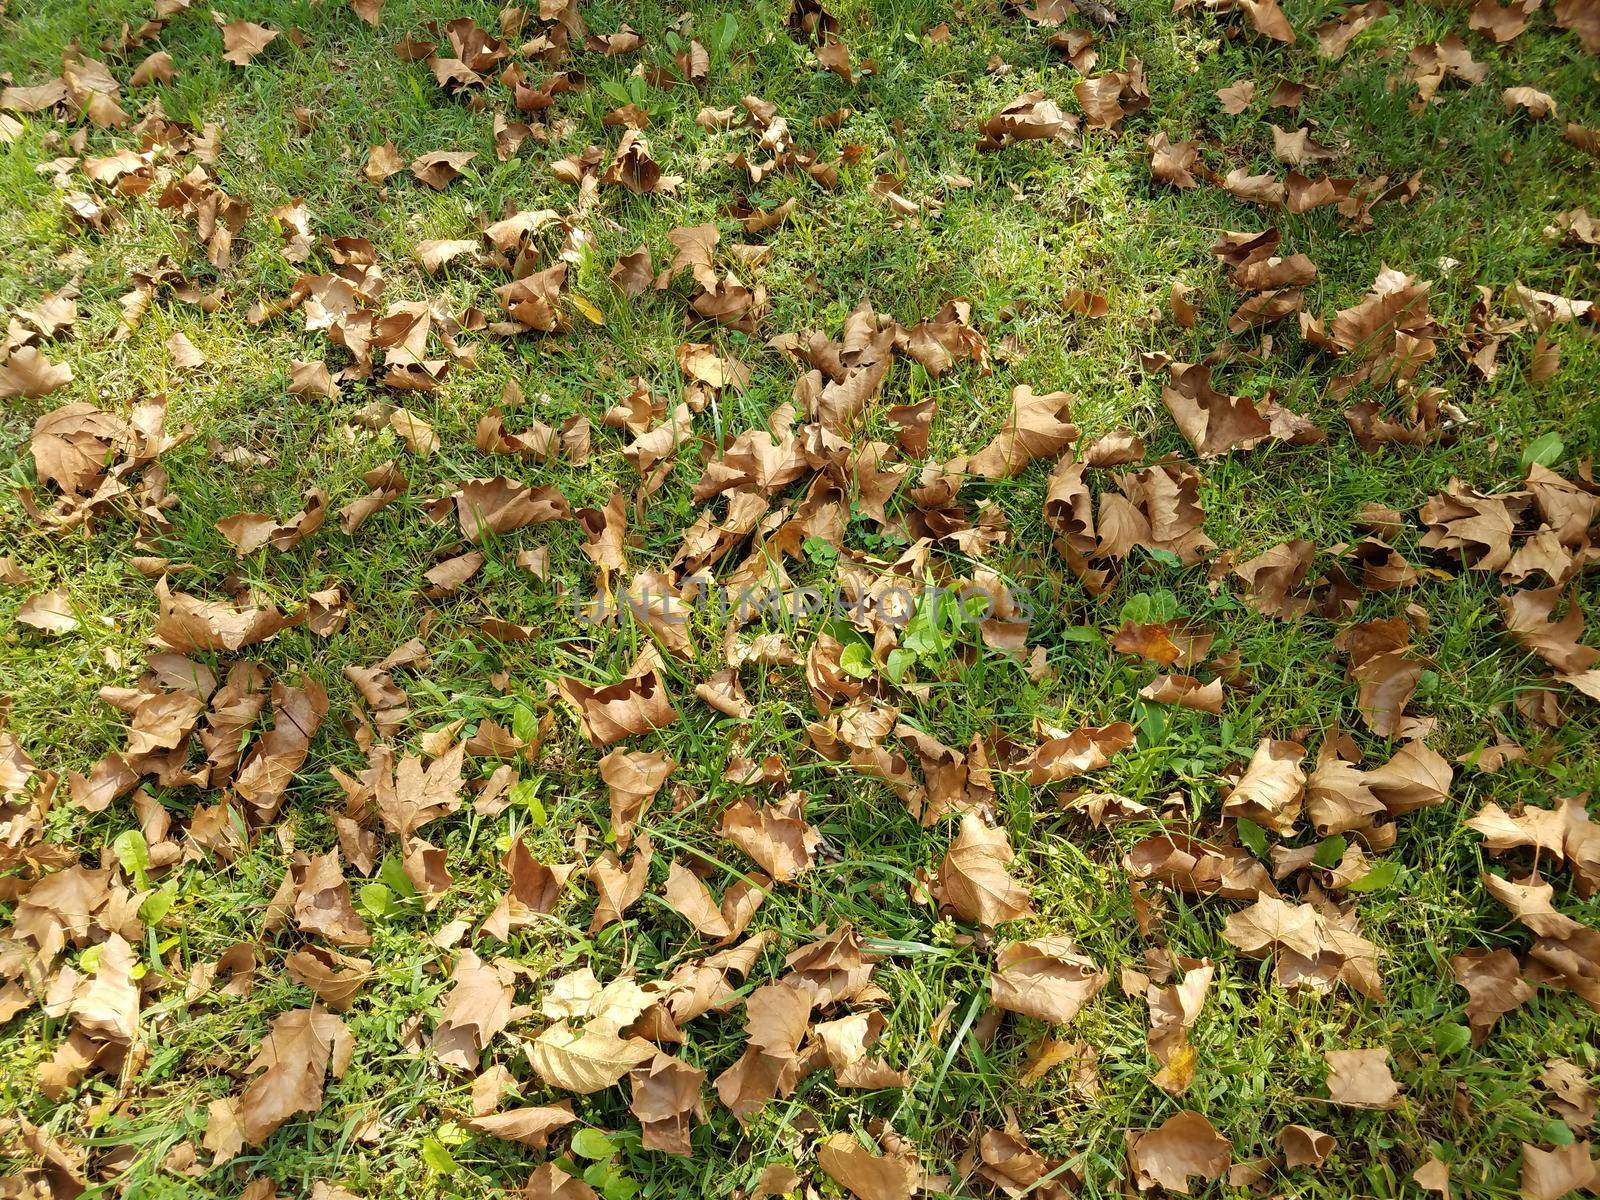 fallen brown leaves on the grass by stockphotofan1